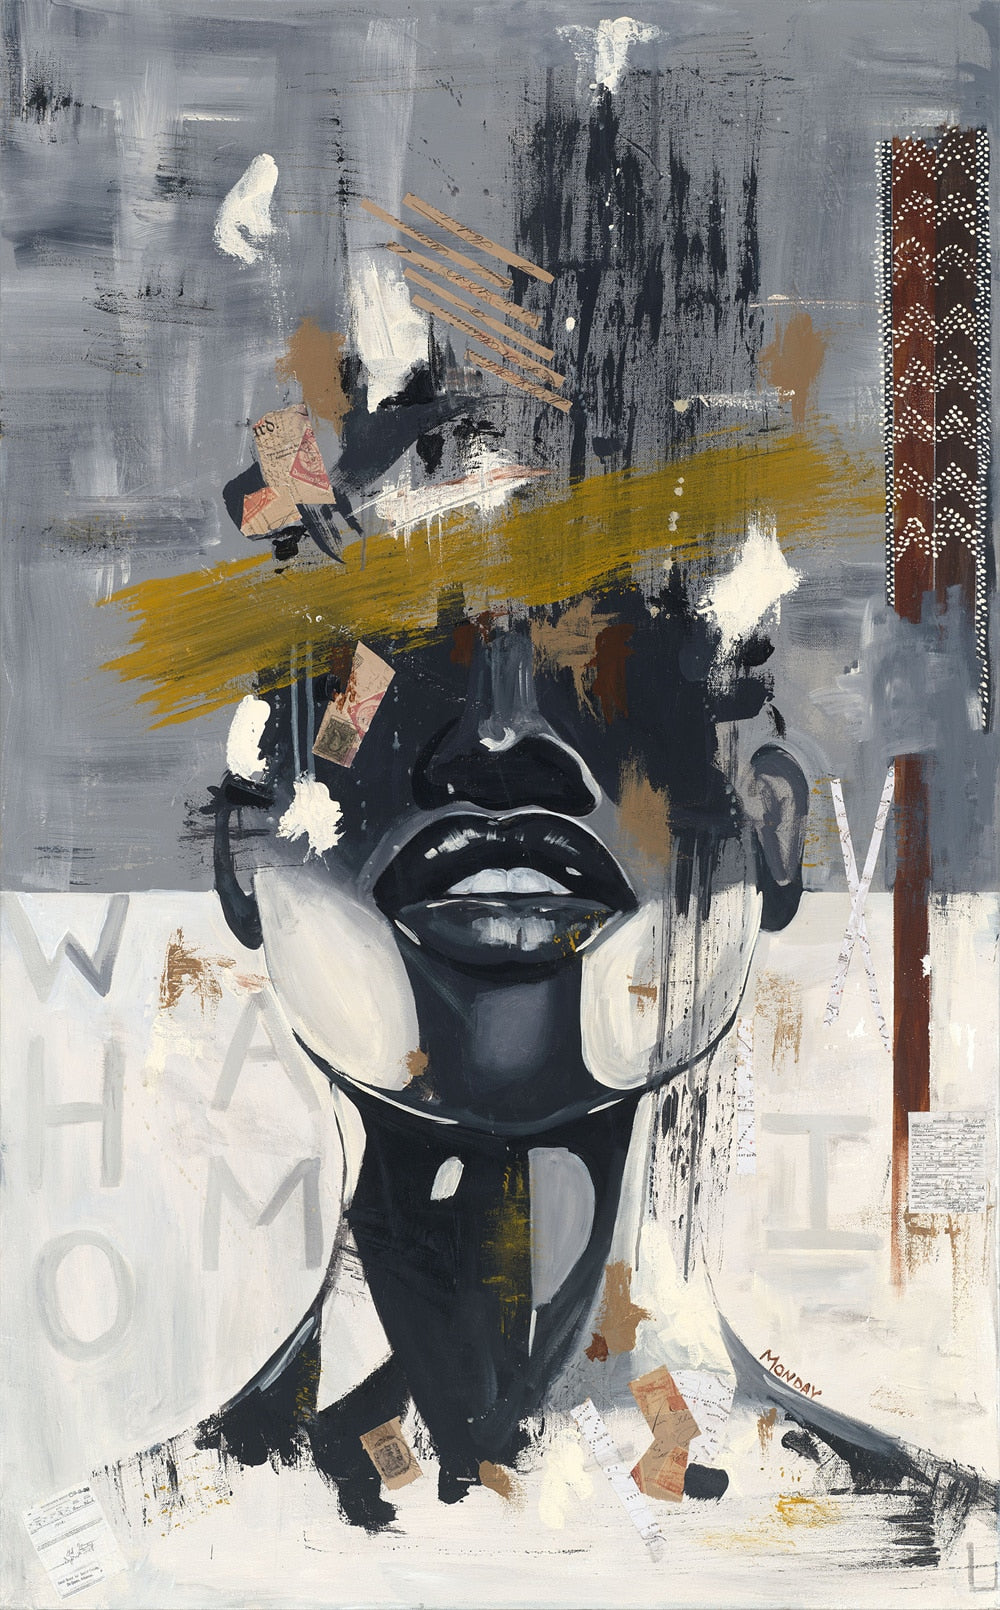 (7 Different Prints)  Graffiti Black Girl Canvas Print African American Art Poster Street Pop Prints